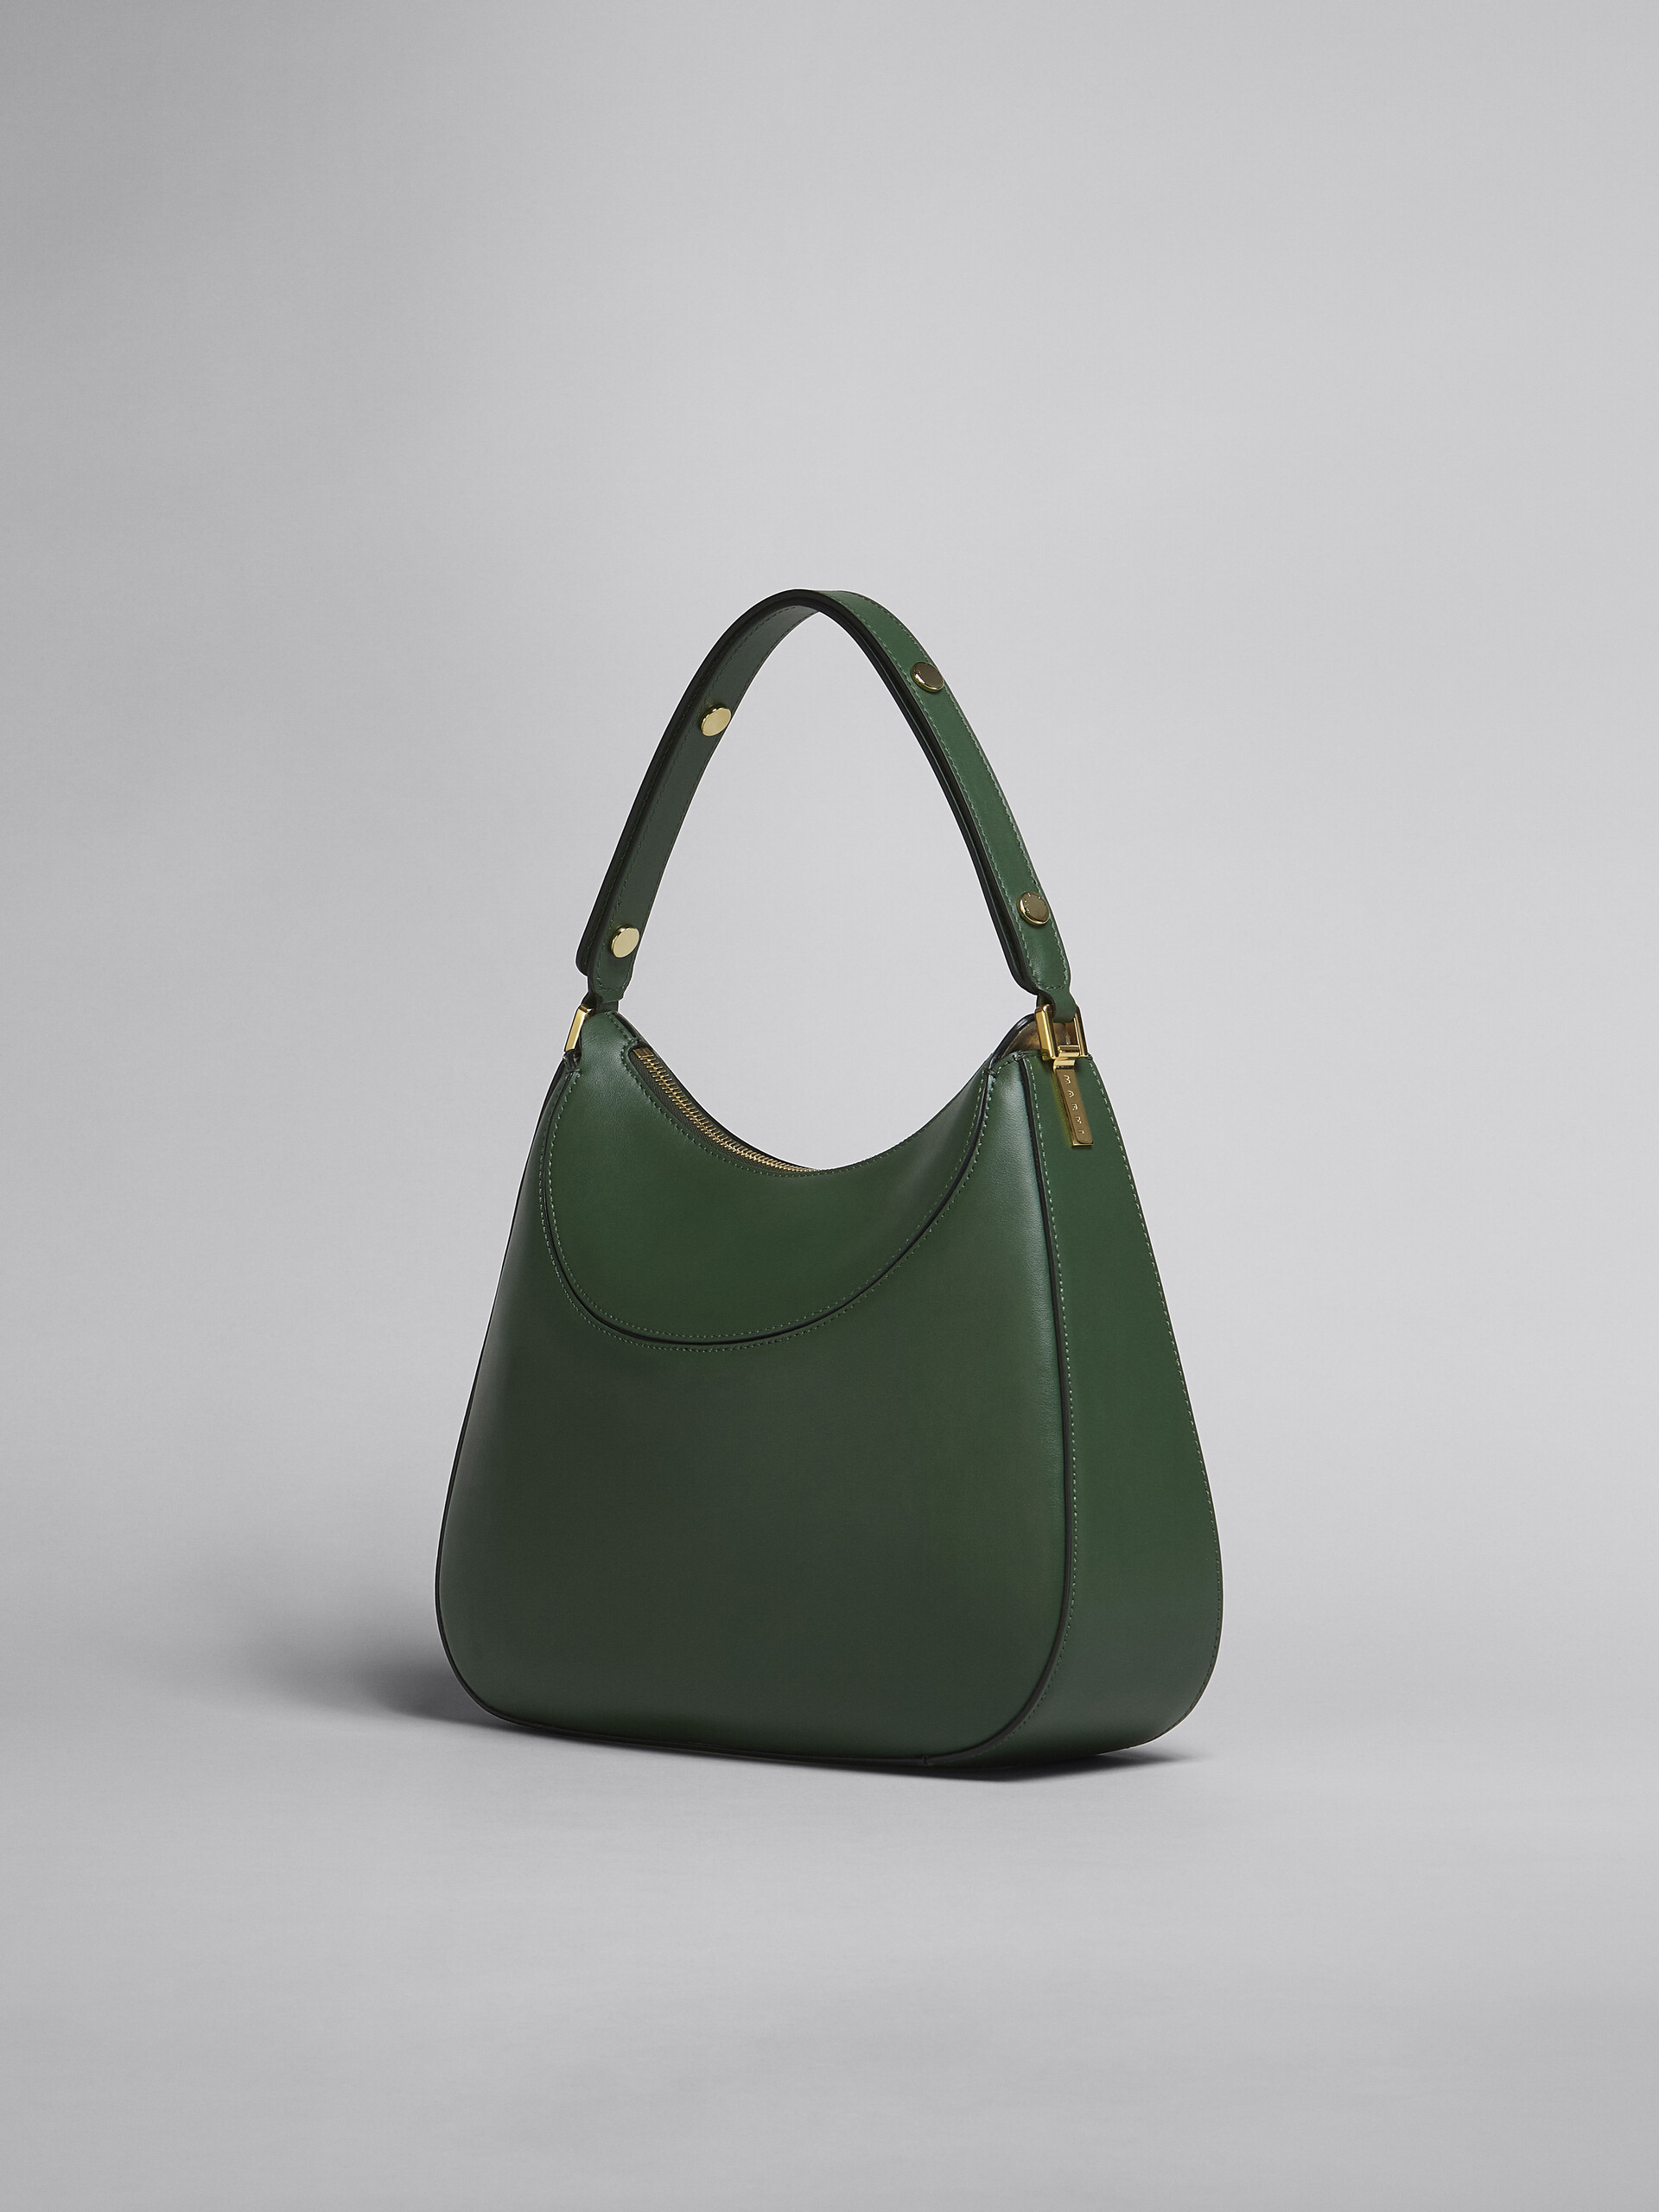 Milano large bag in green leather - Handbag - Image 3